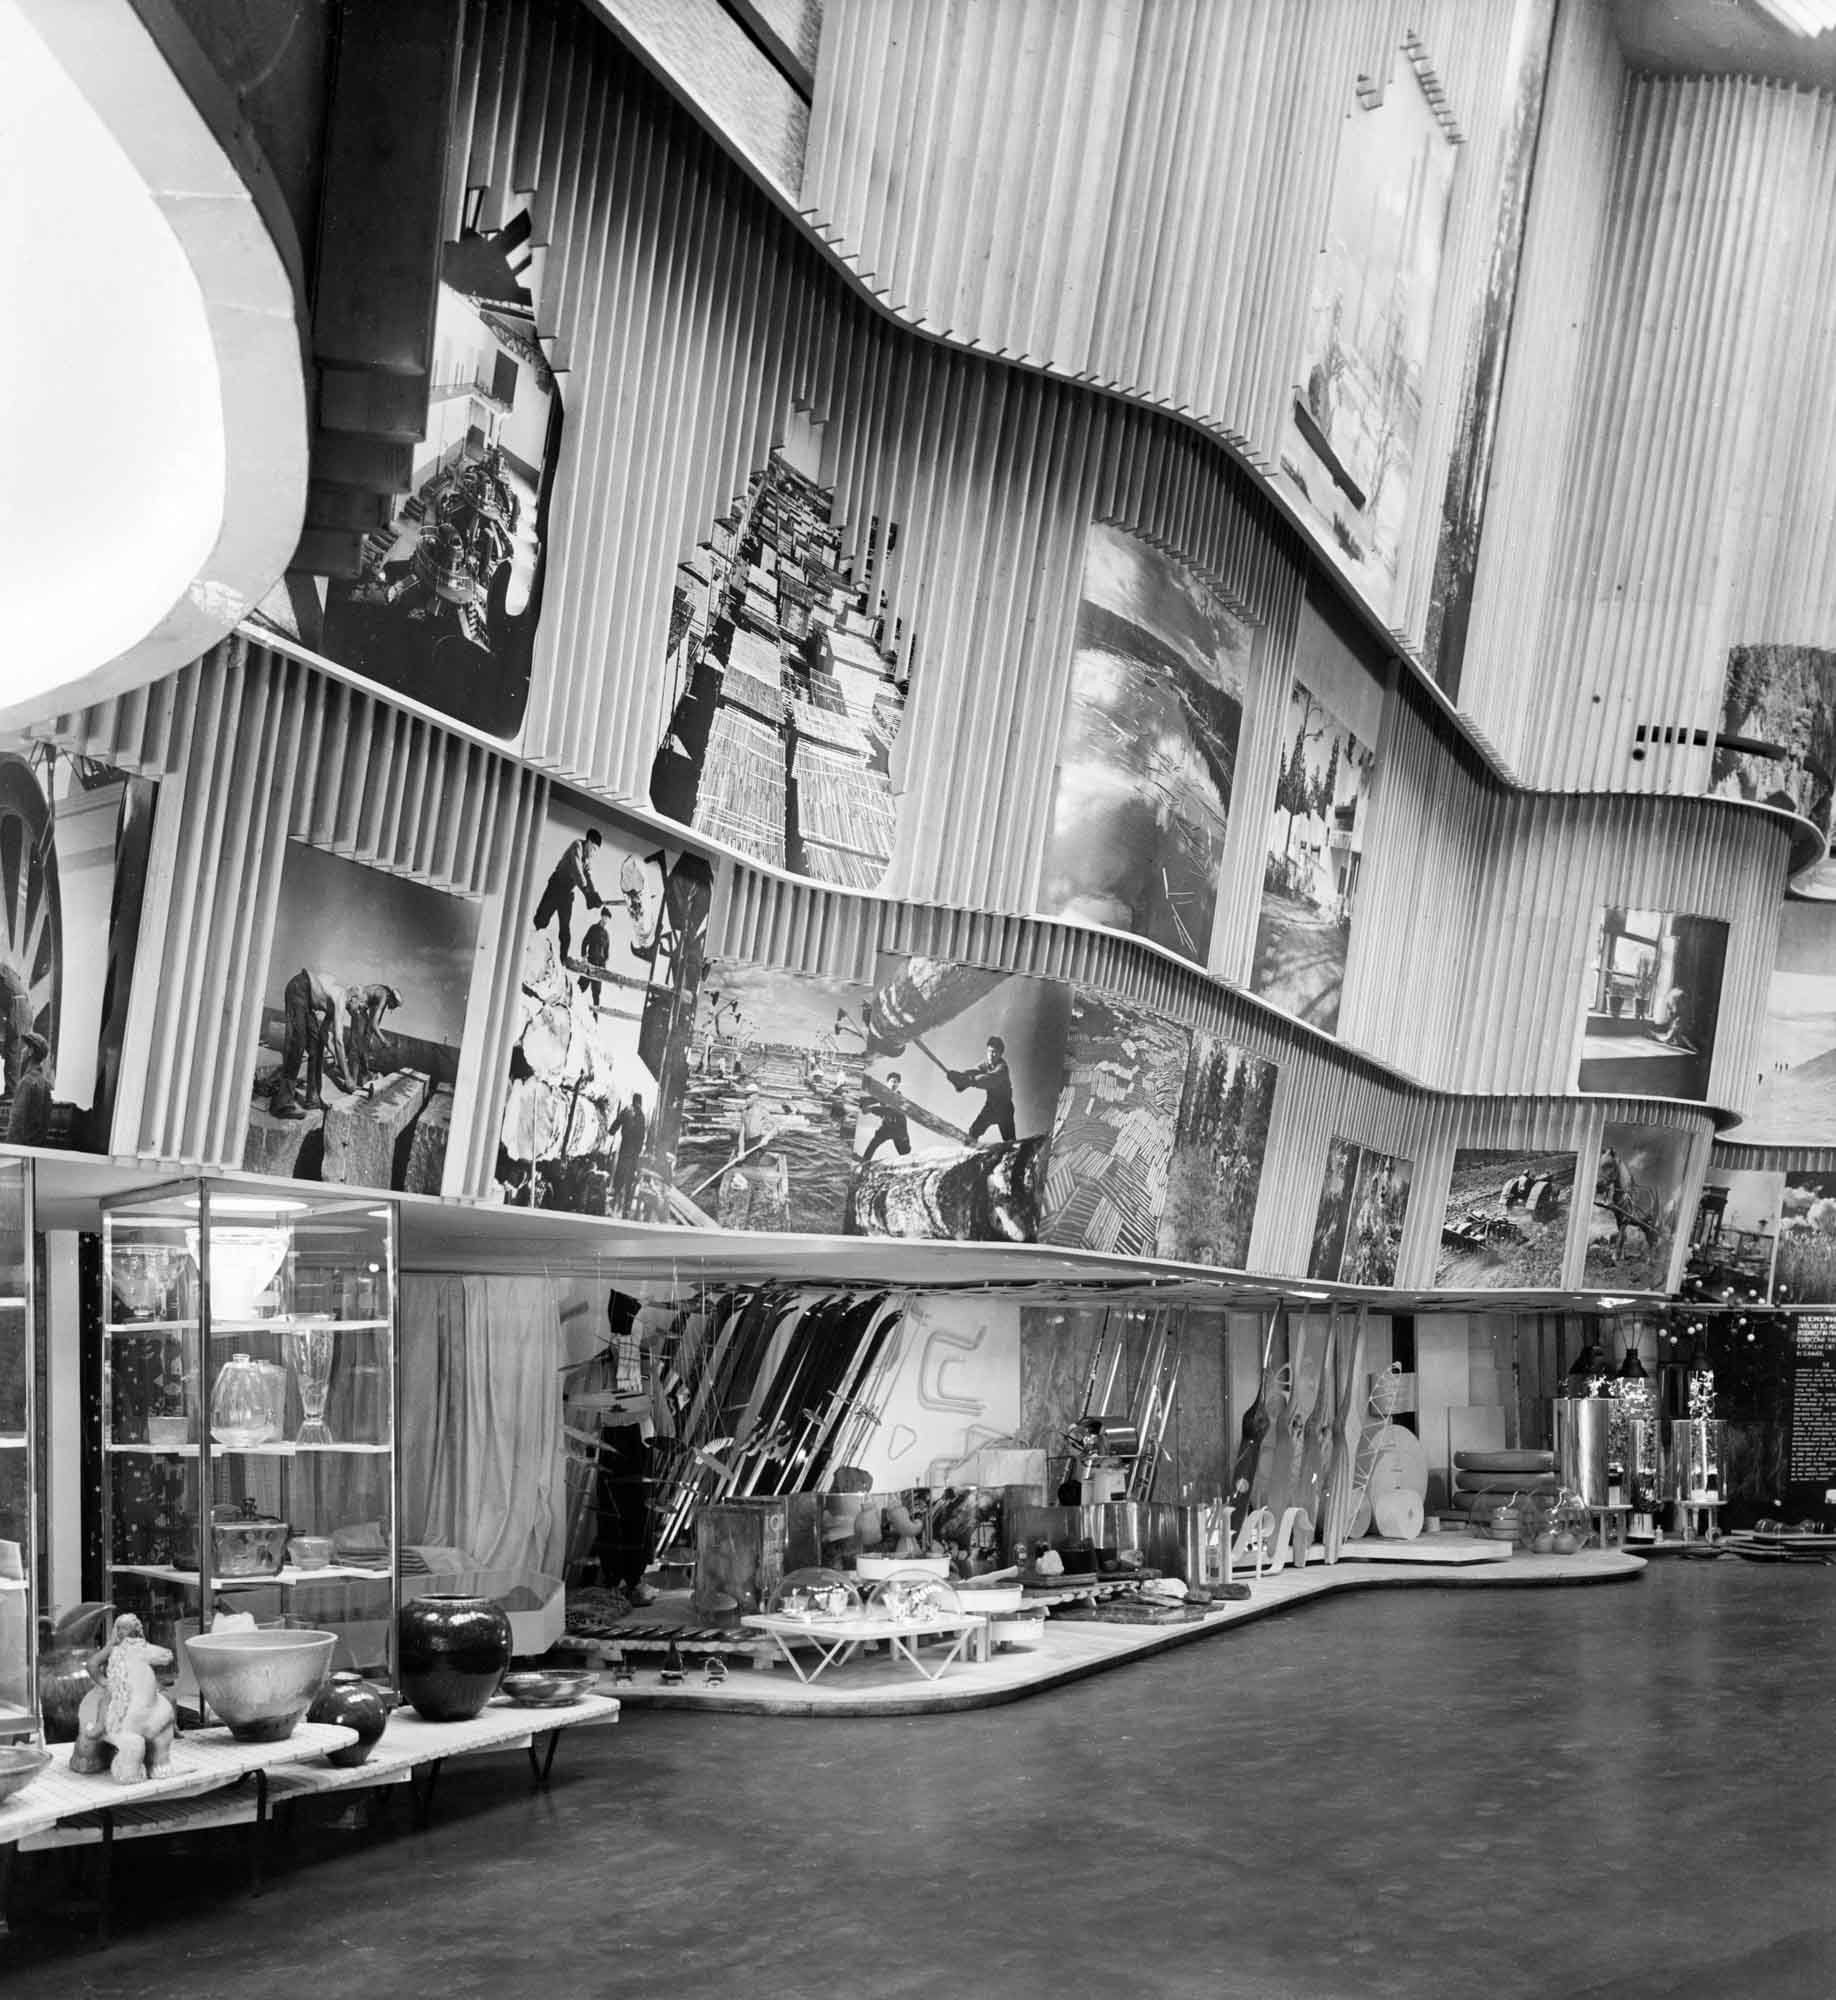 The Finnish Pavillion at the New York World’s Fair 1939.